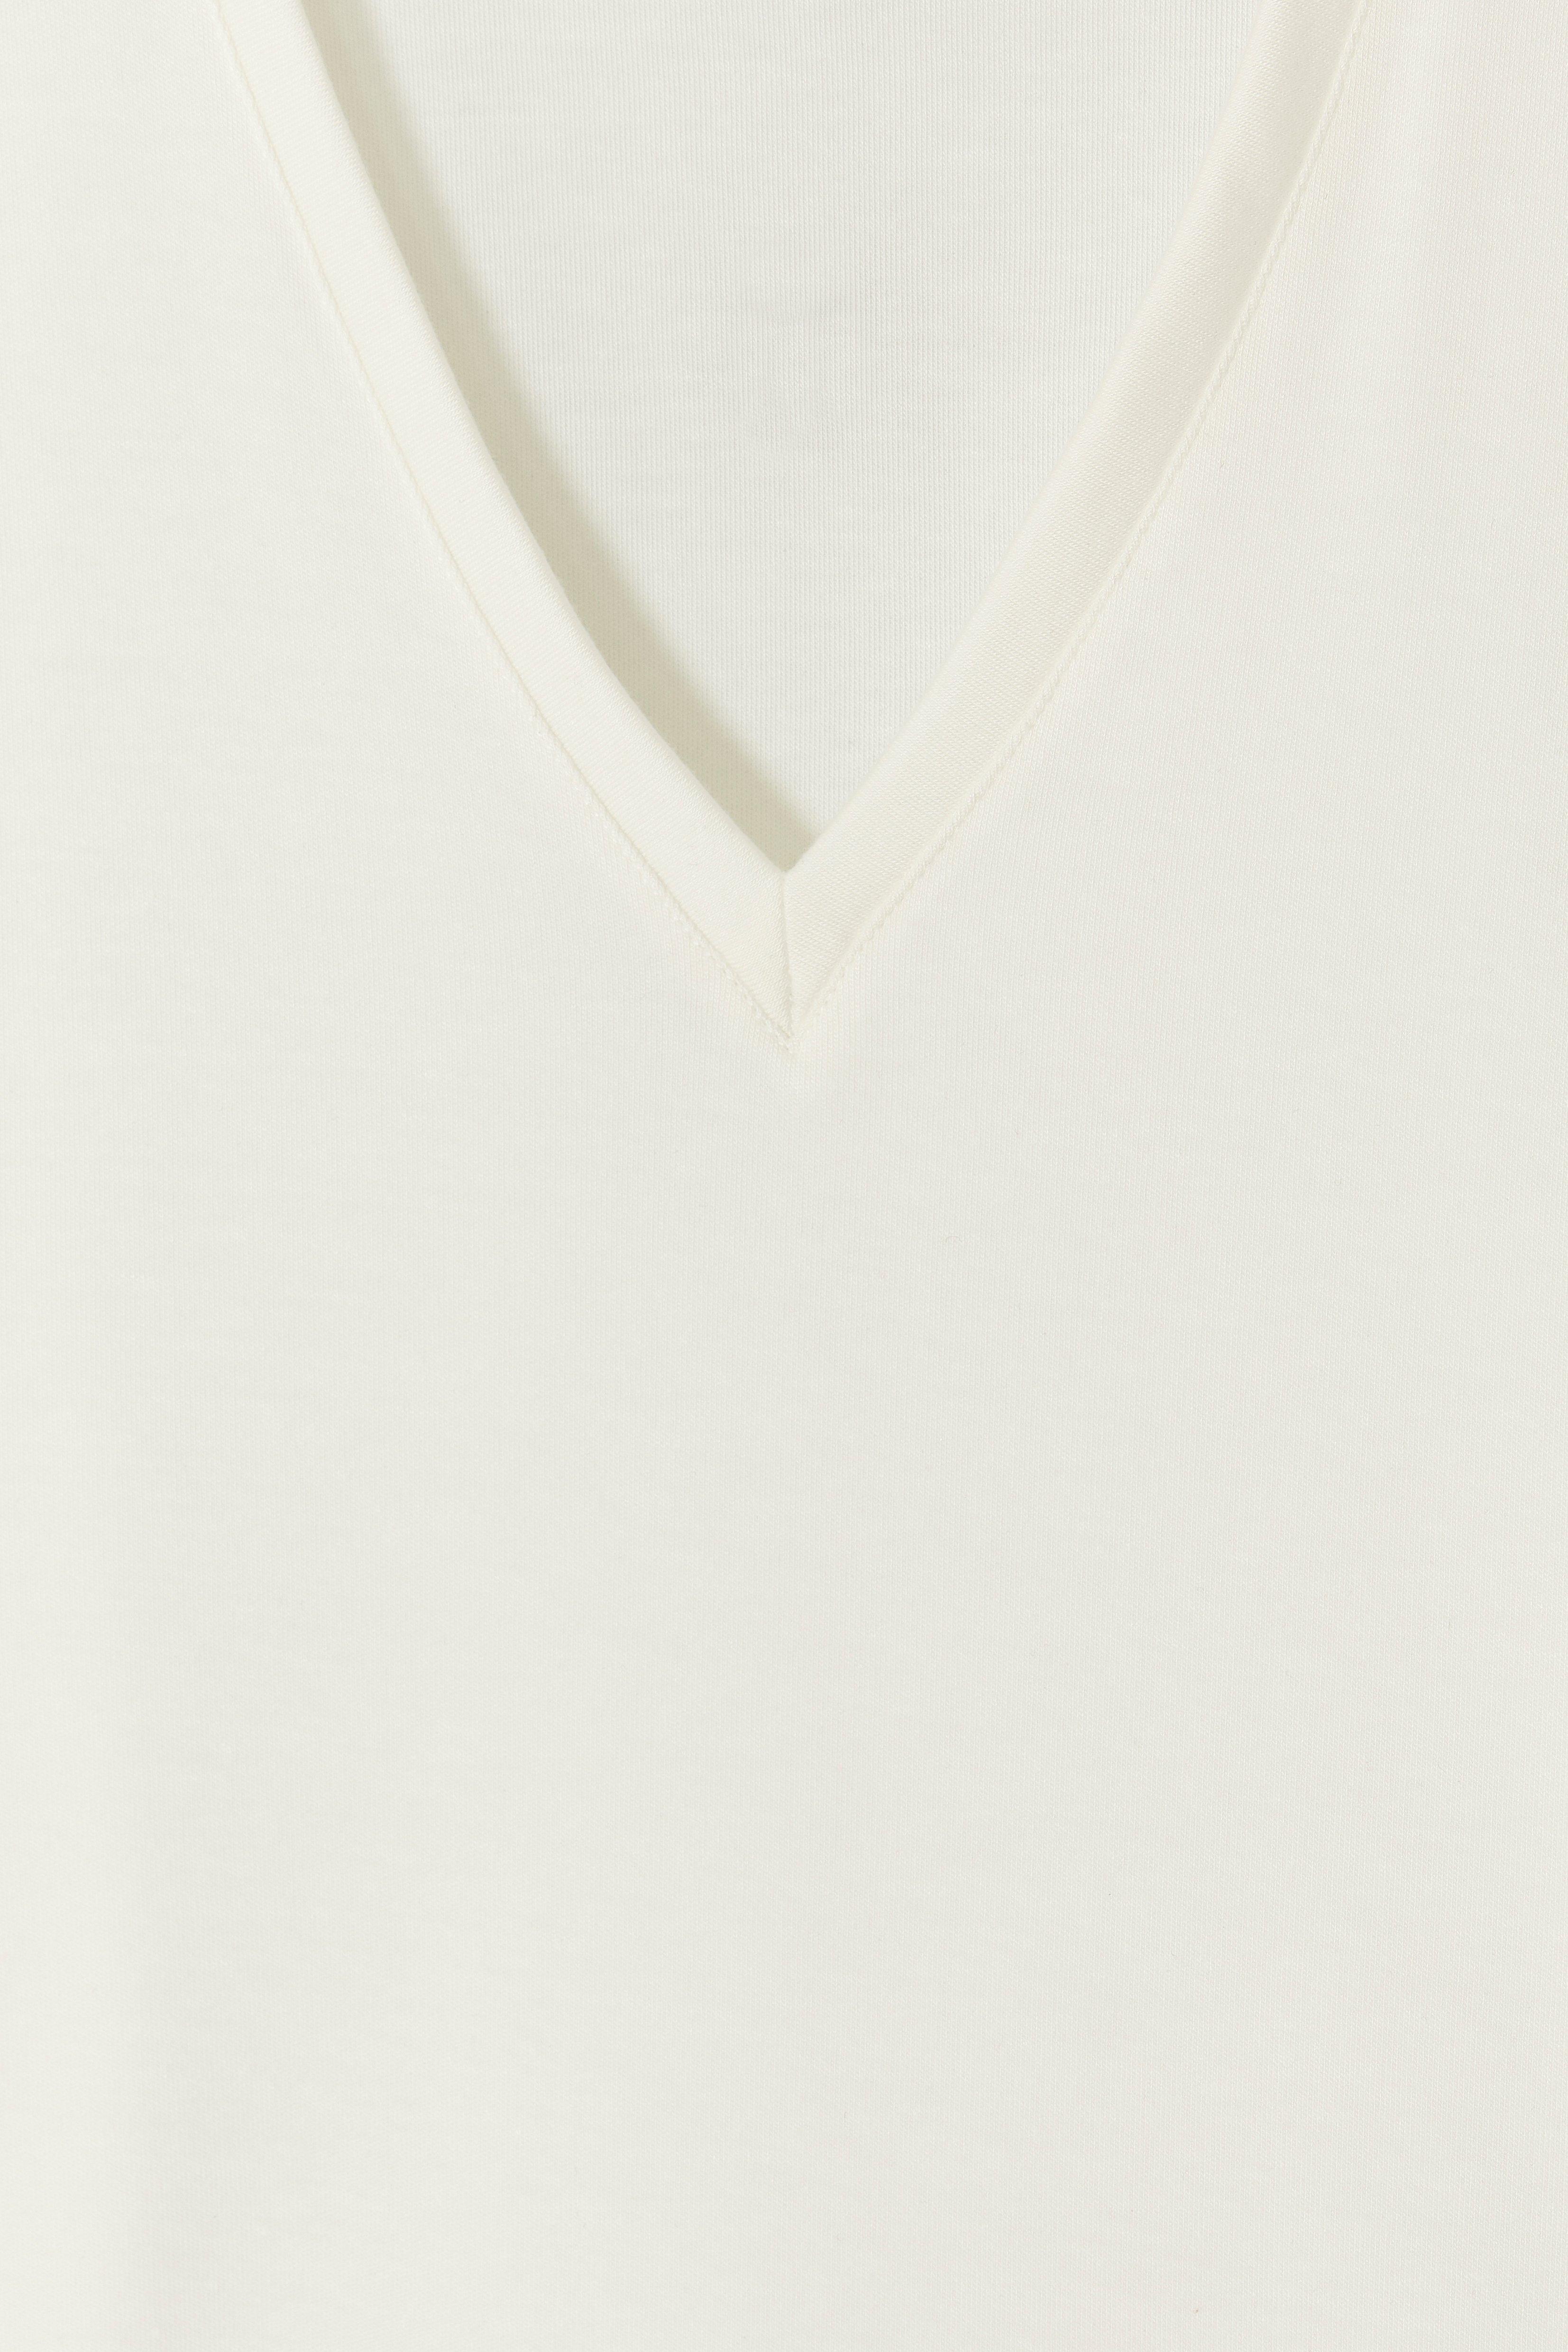 CKS Dames - TIKO - t-shirt short sleeves - white